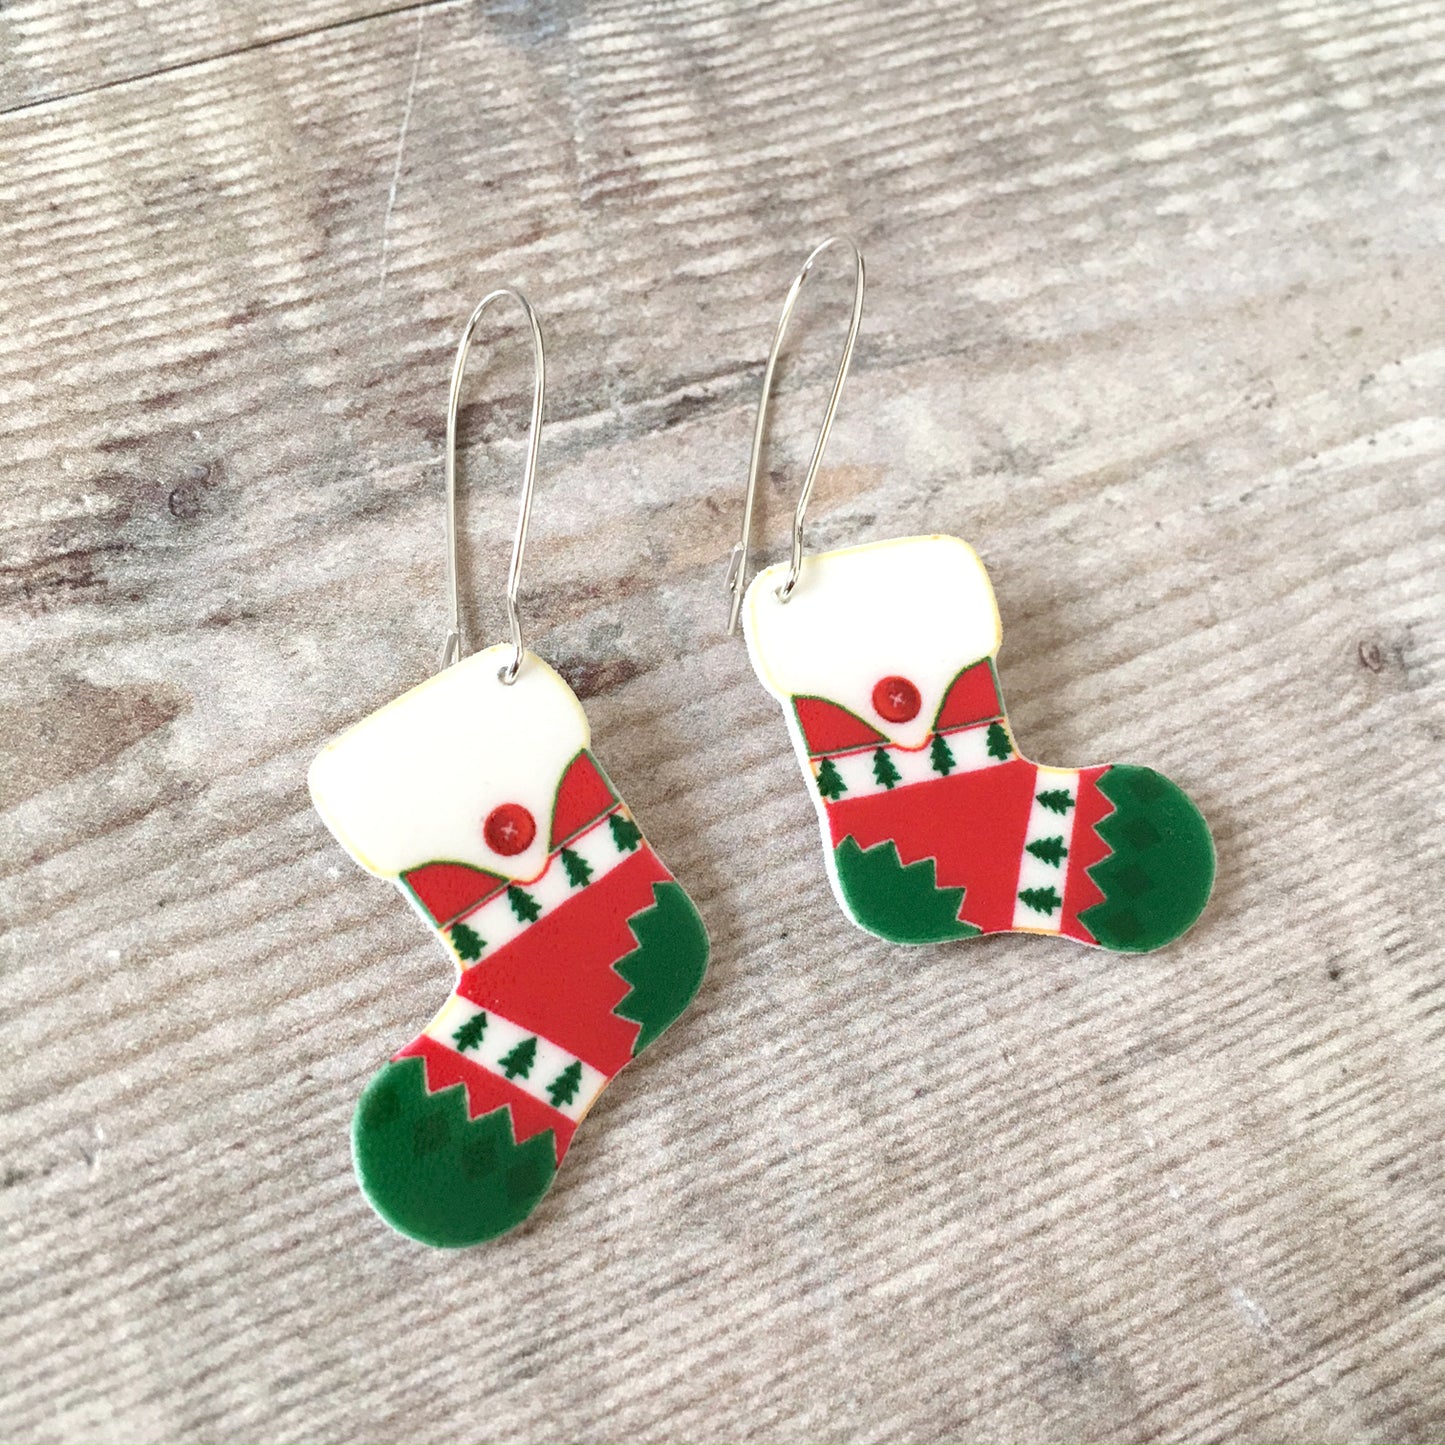 Christmas stocking novelty drop earrings - Secret santa gift